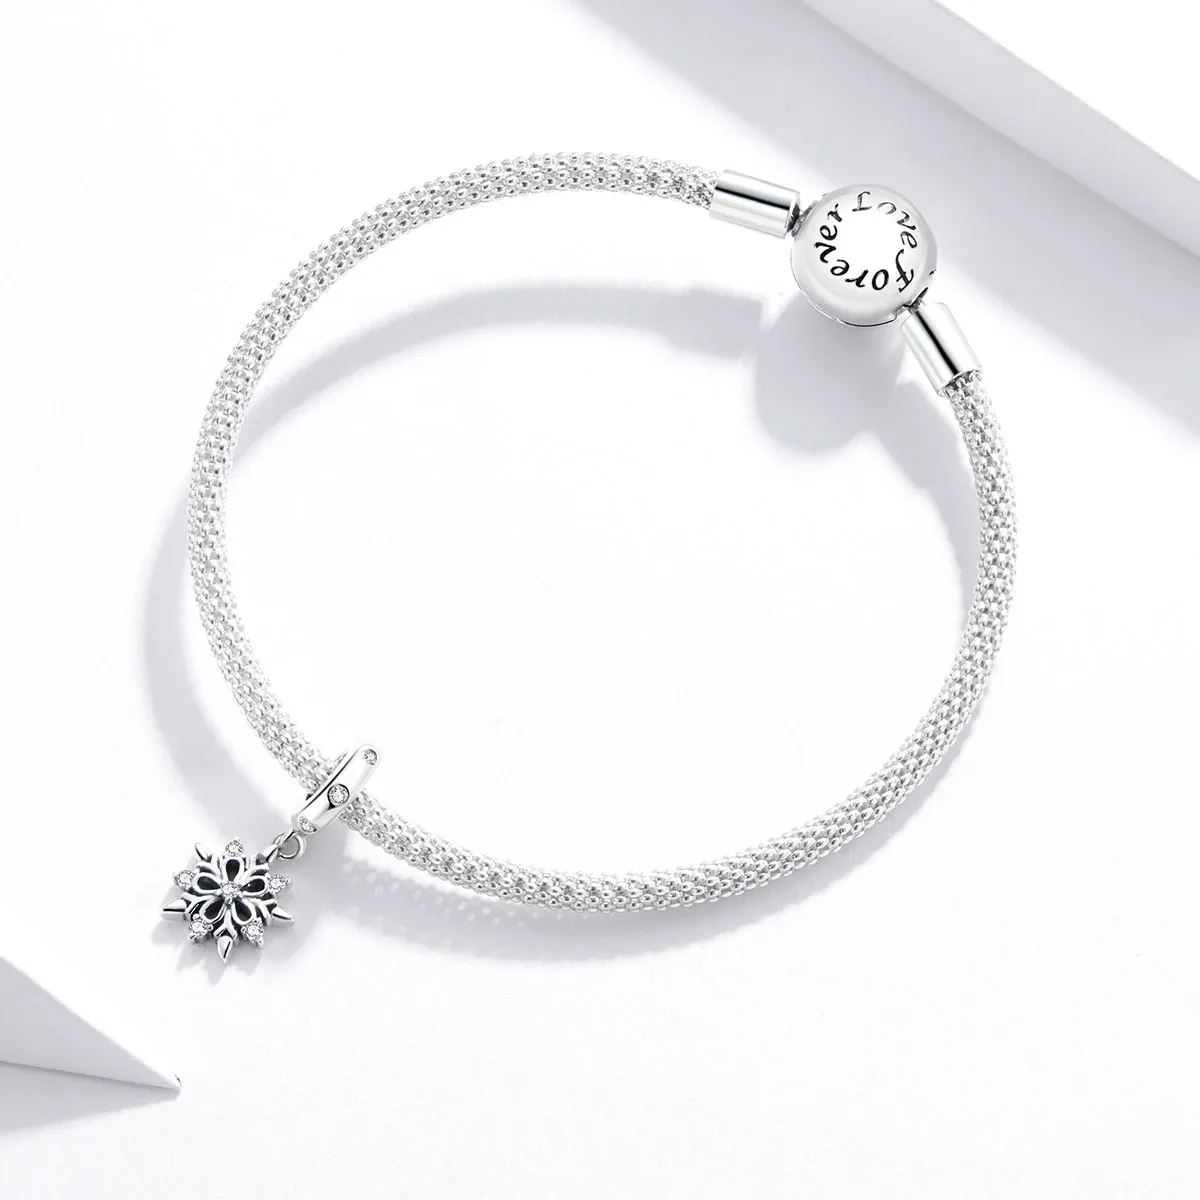 Pandora Style Crystal Snowflake Dangle - SCC1649